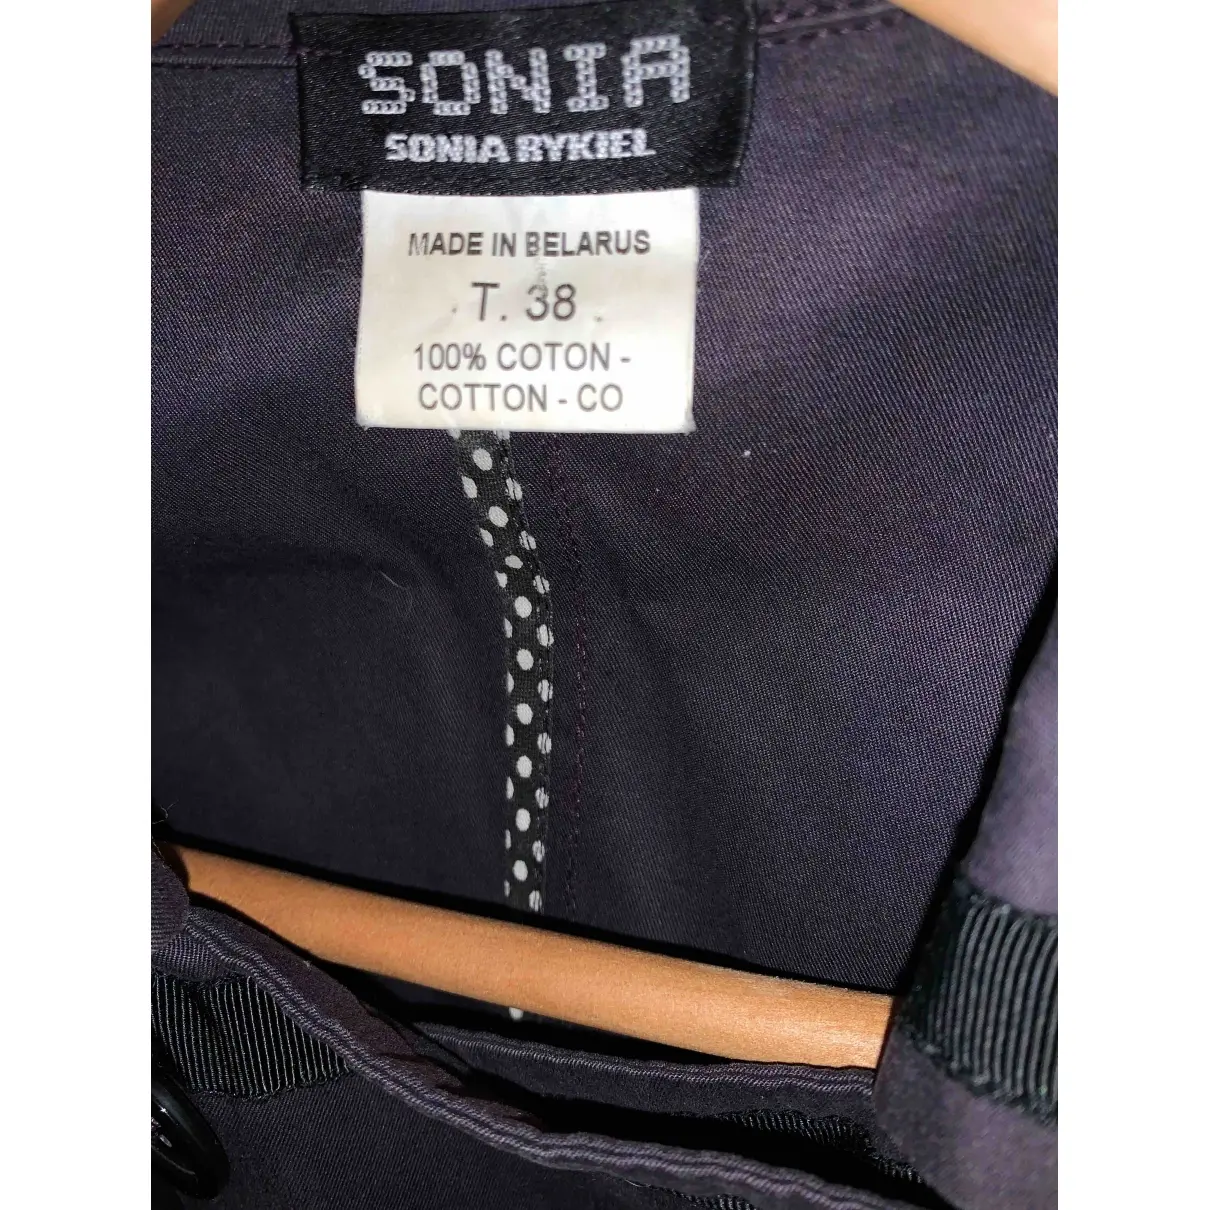 Buy Sonia by Sonia Rykiel Jacket online